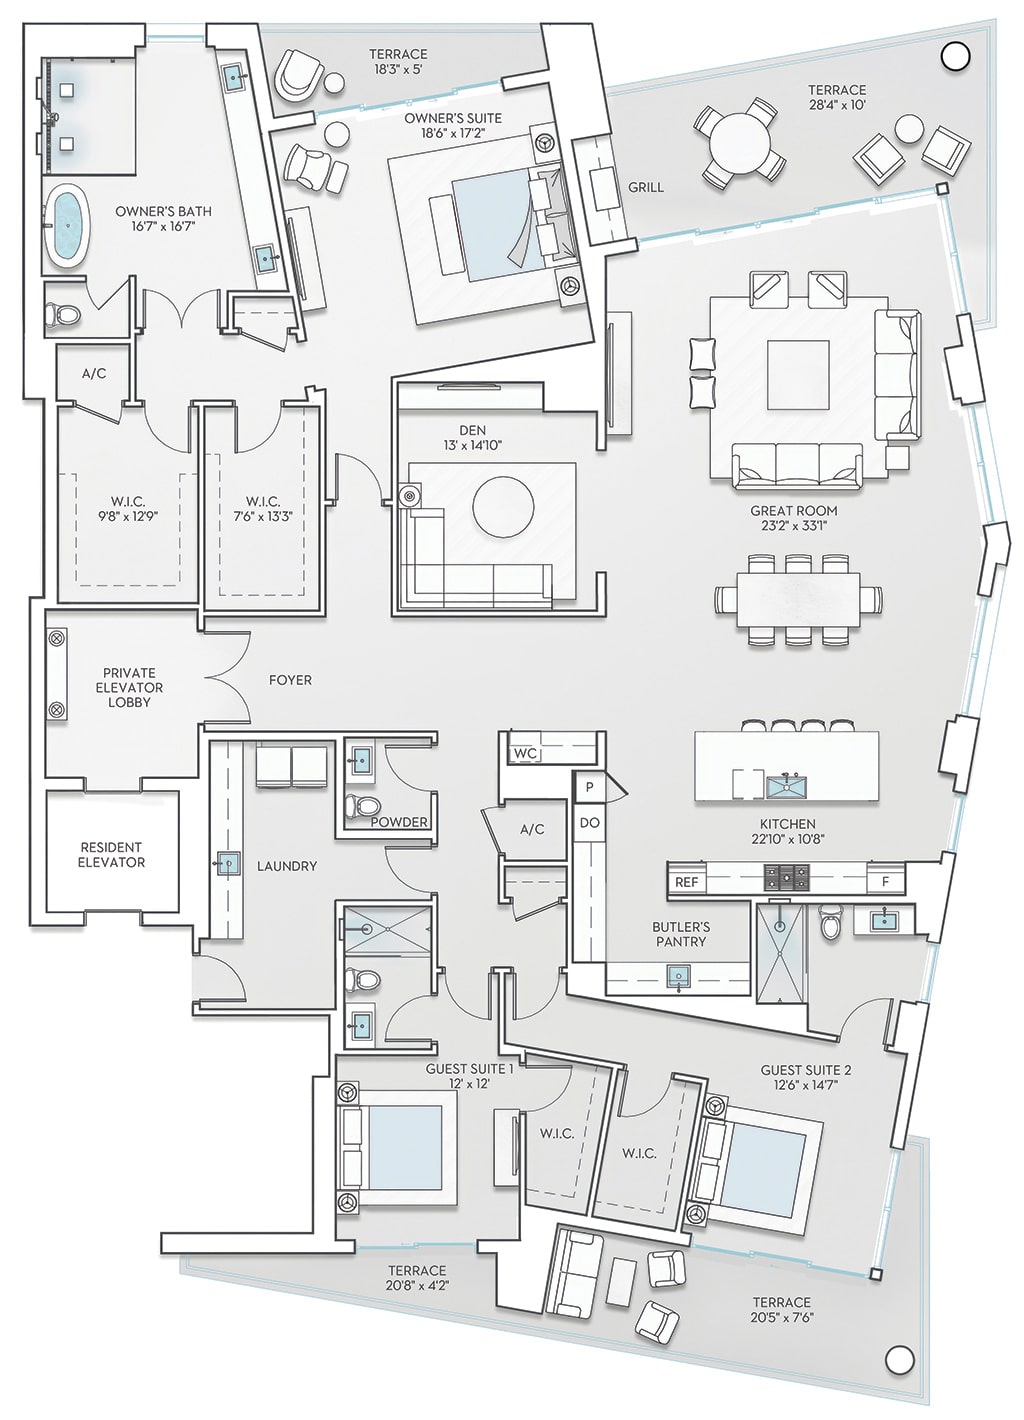 floorplan of residnece j